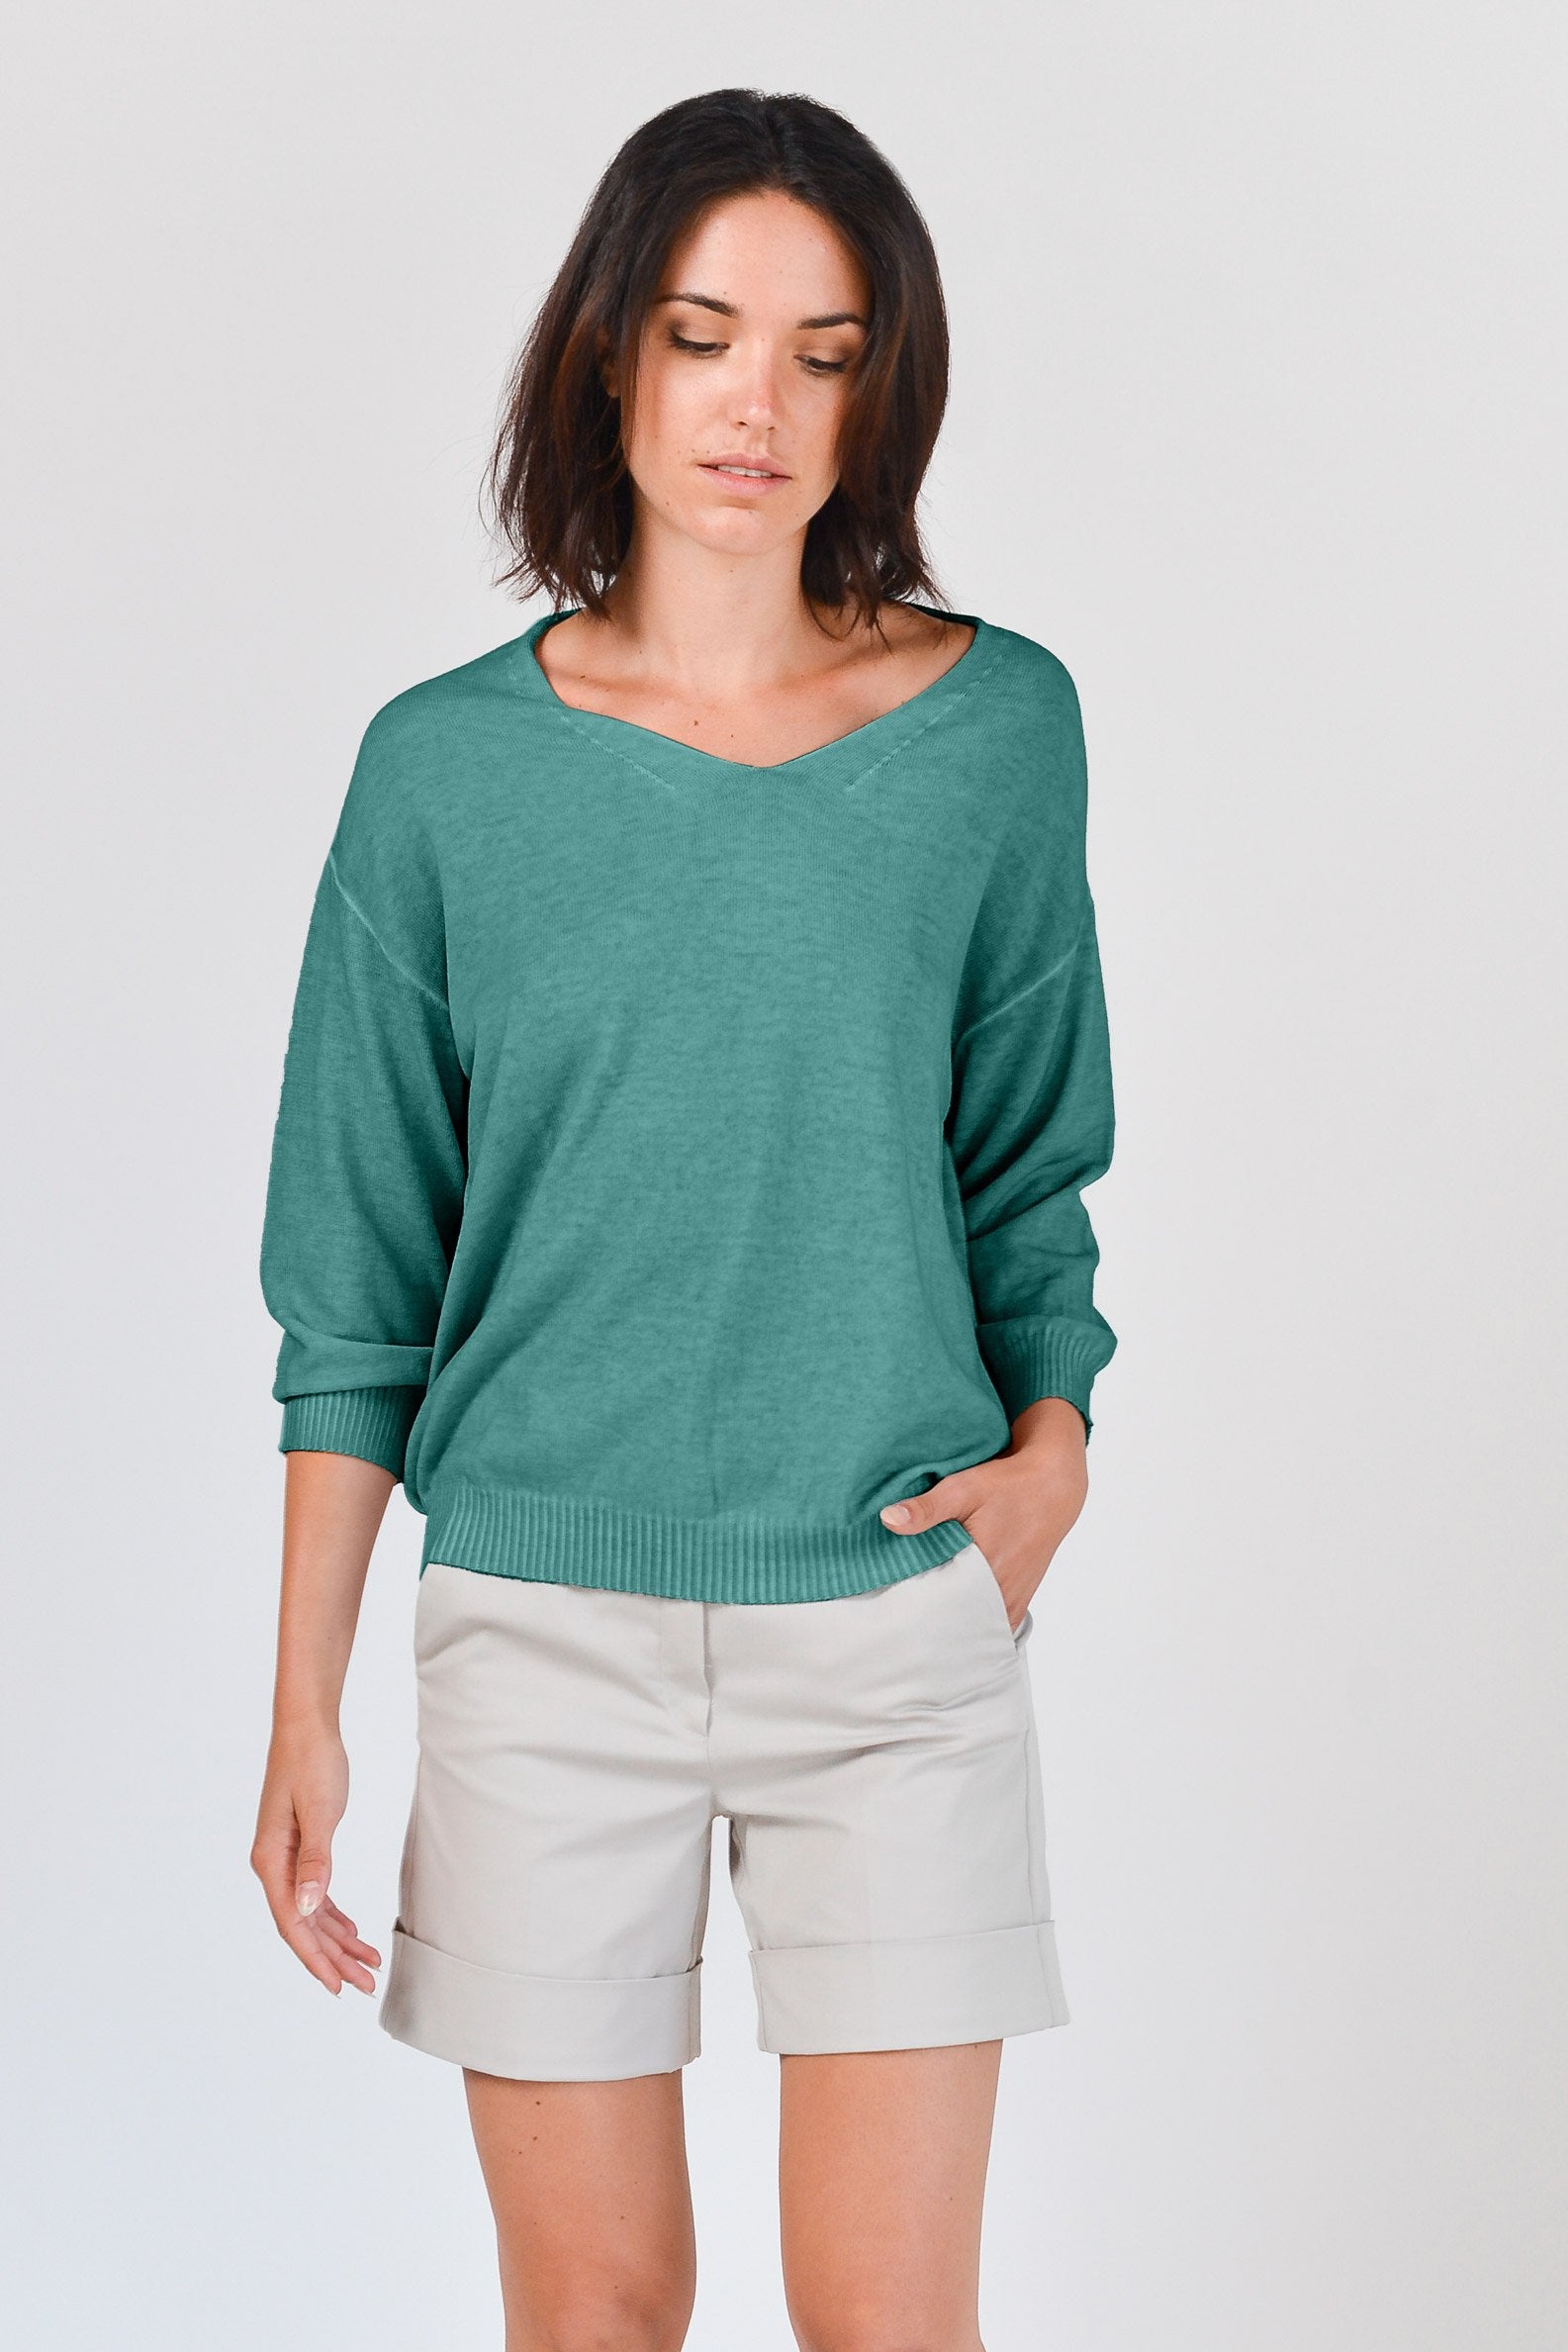 Egg Shaped Cotton Sweater - Bahama - Sweaters